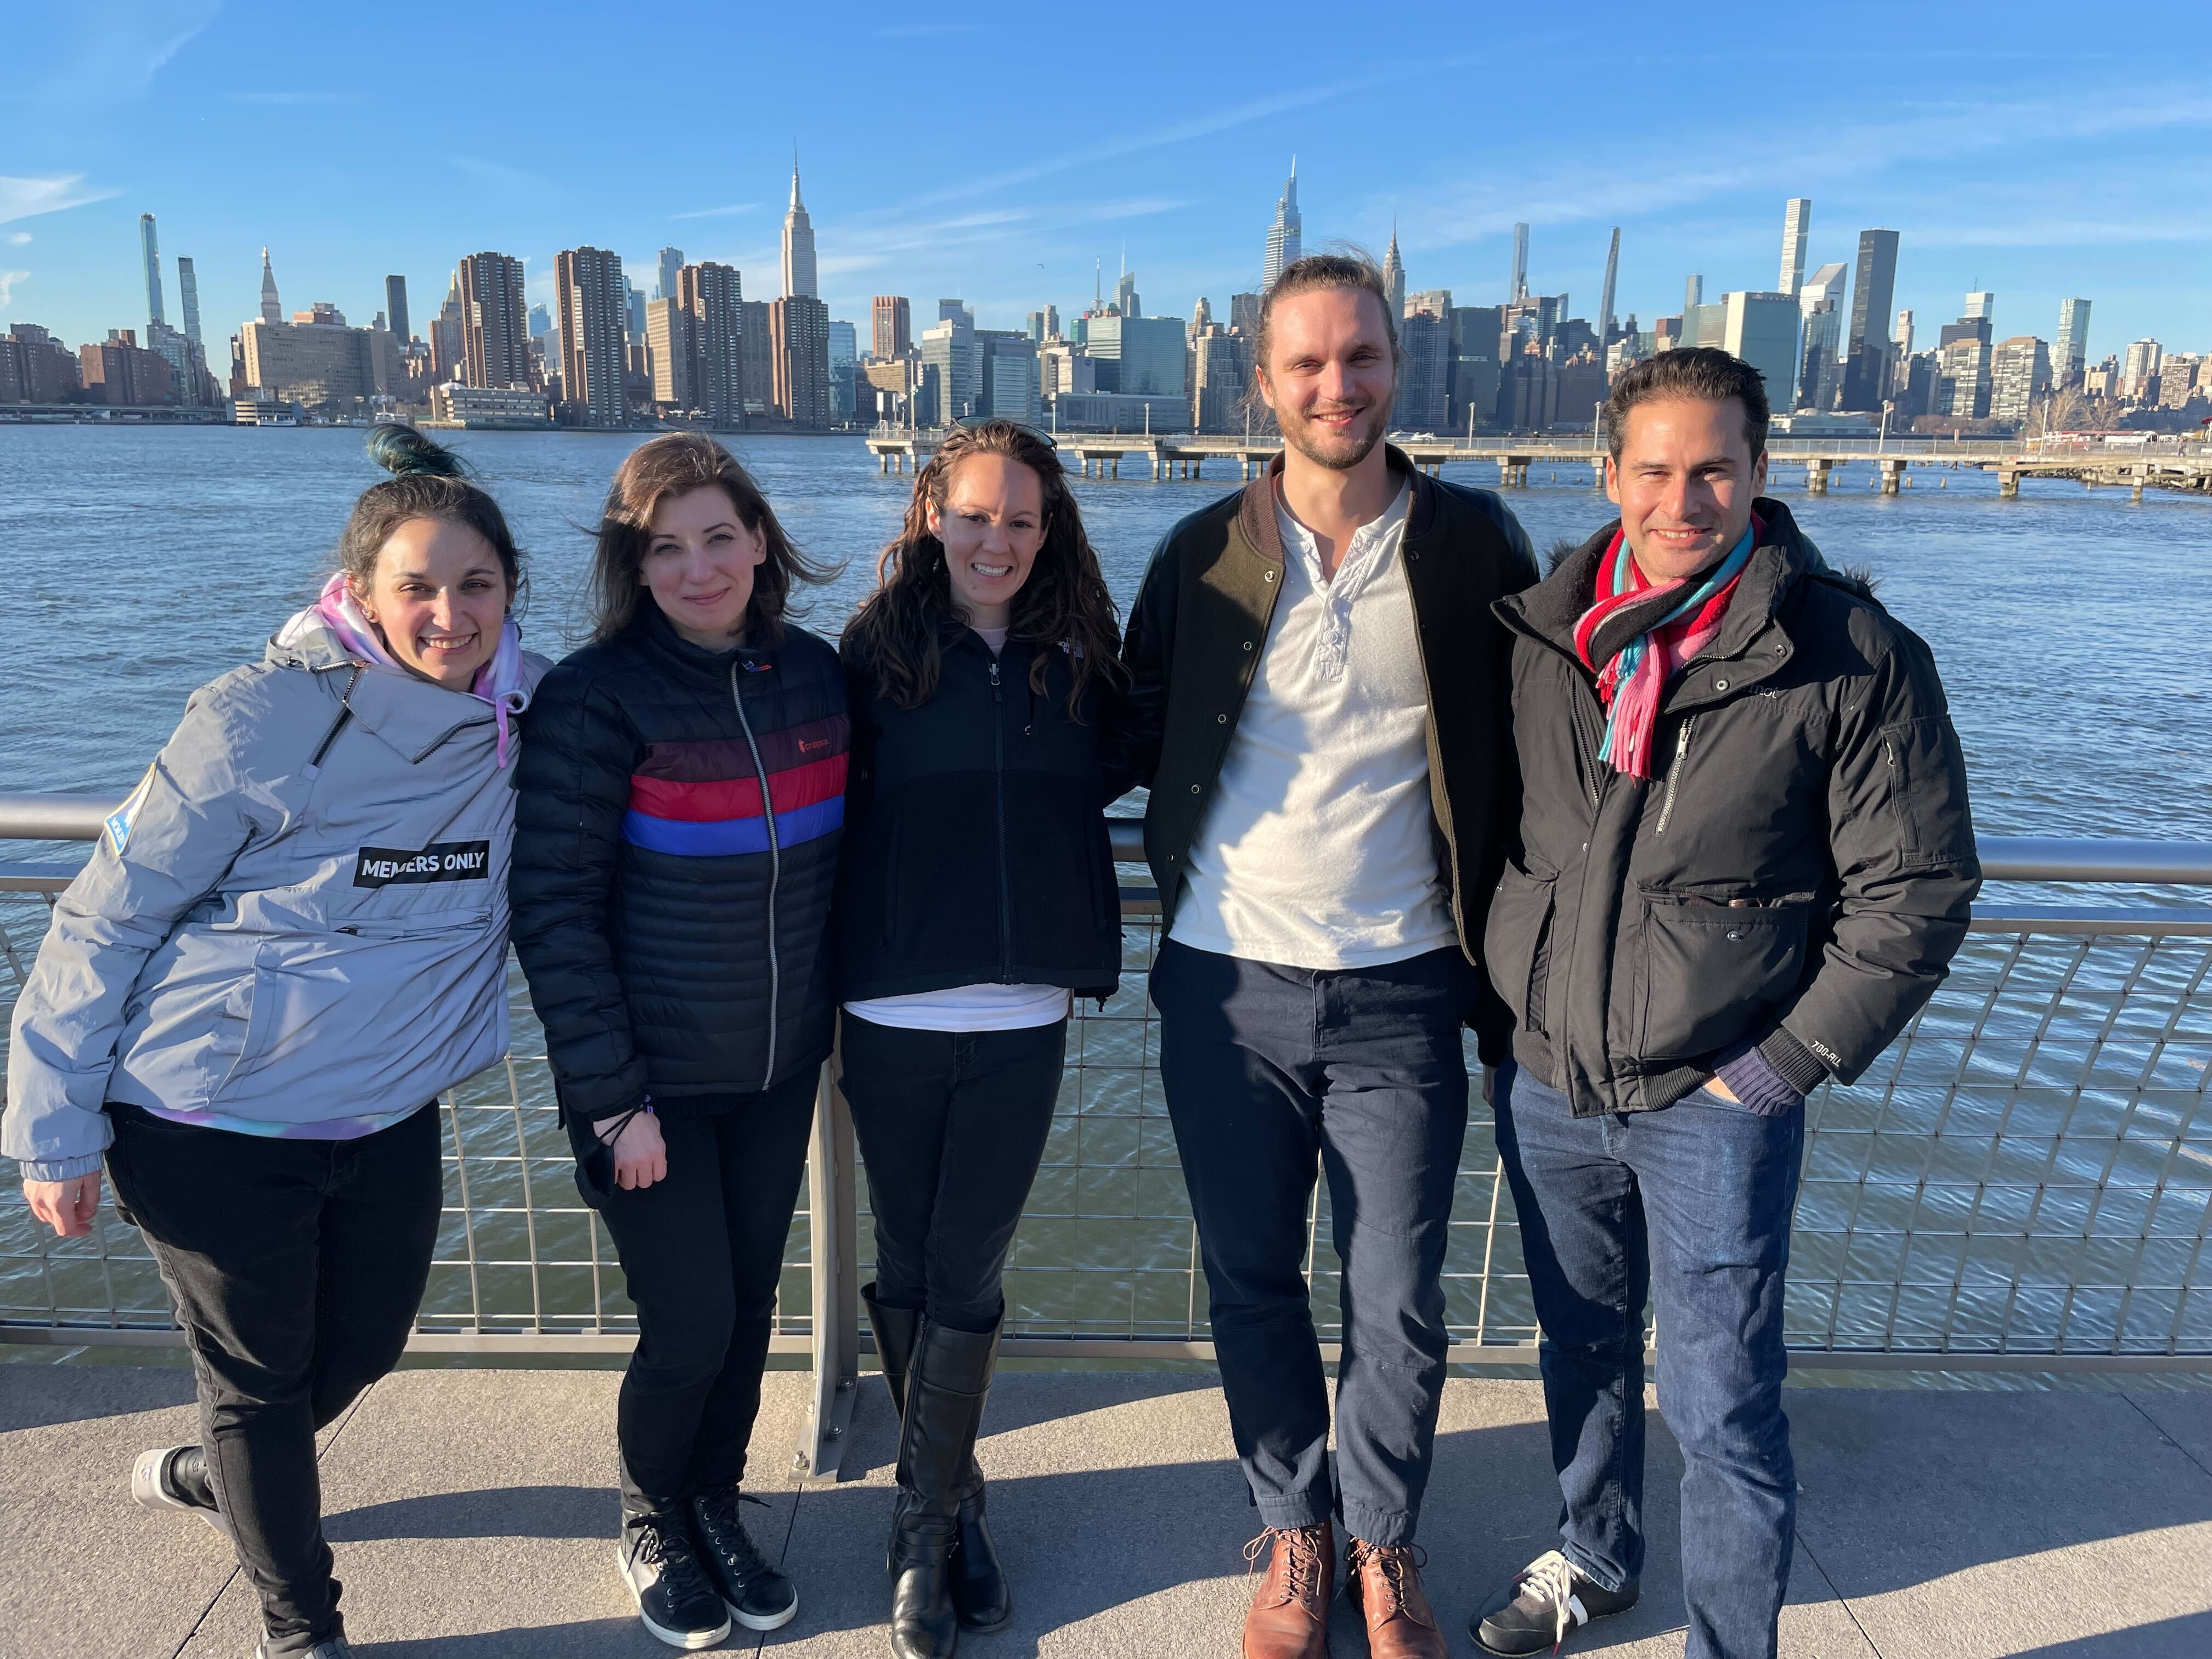 Alley Lede team posing in front of the New York skyline